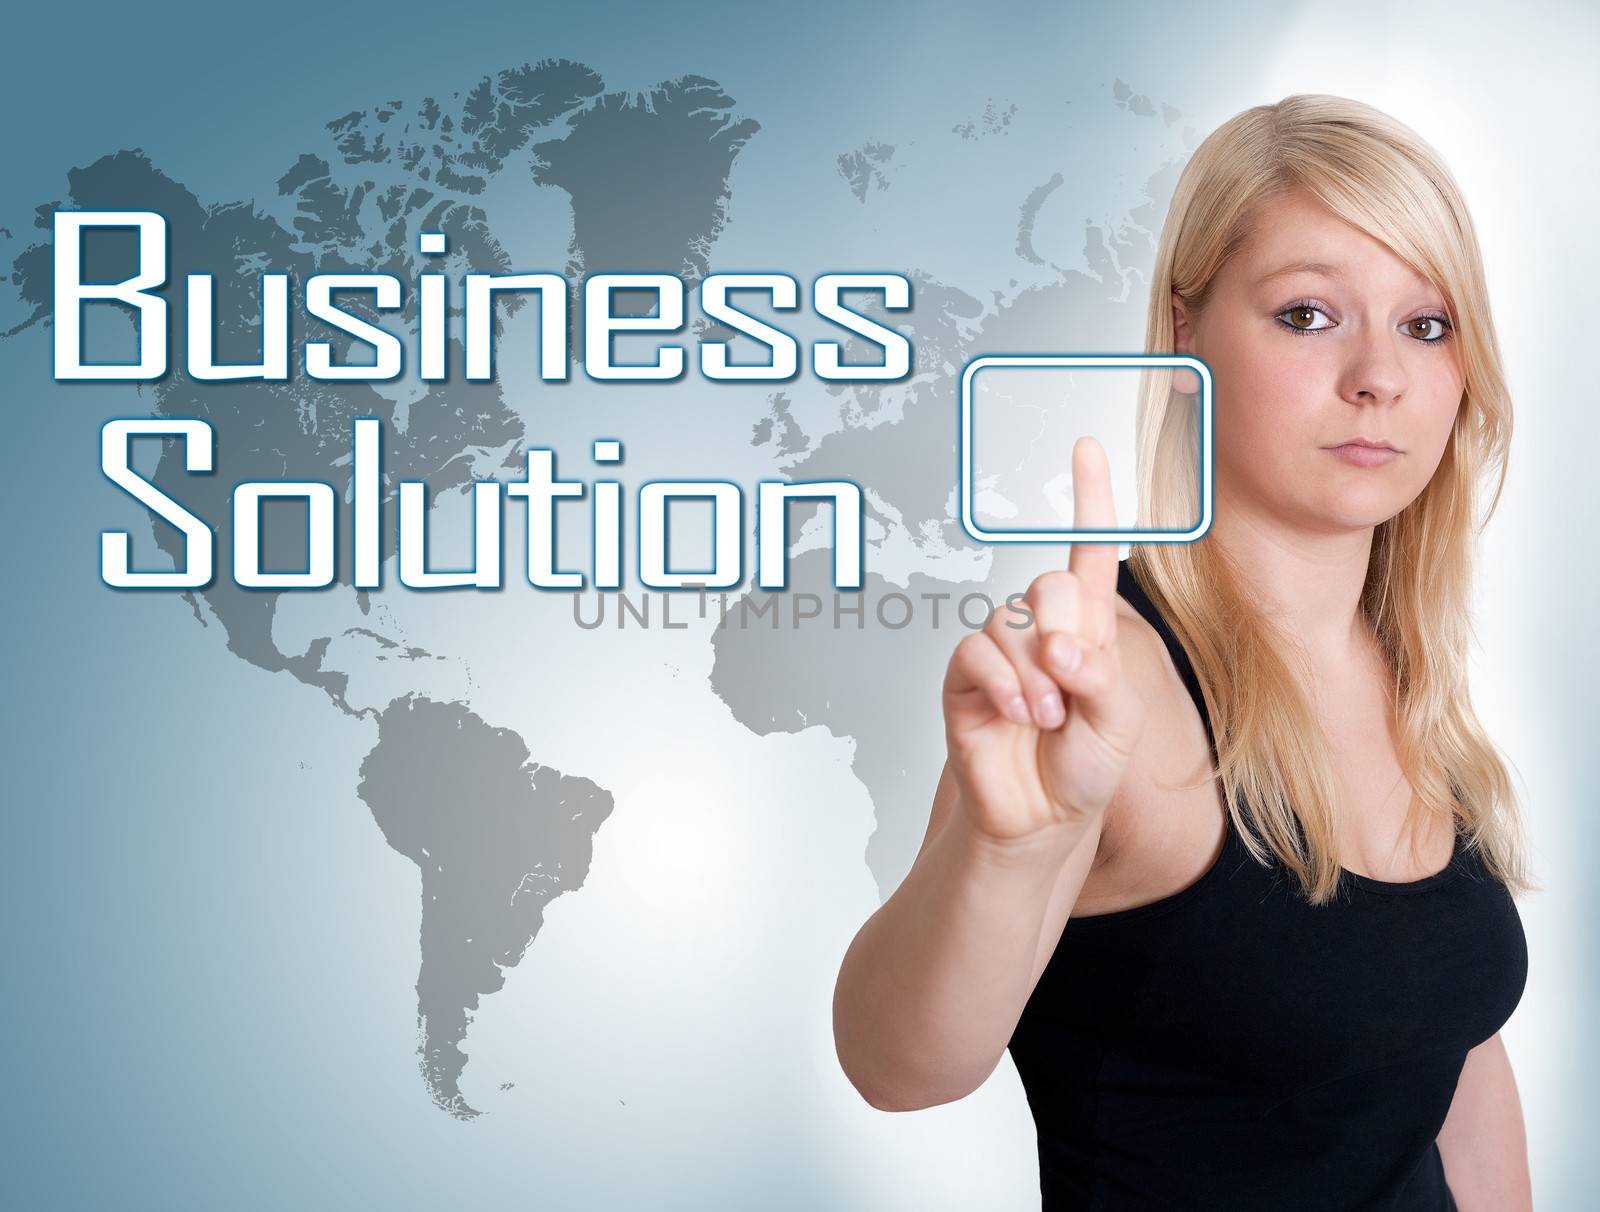 Business Solution by Mazirama